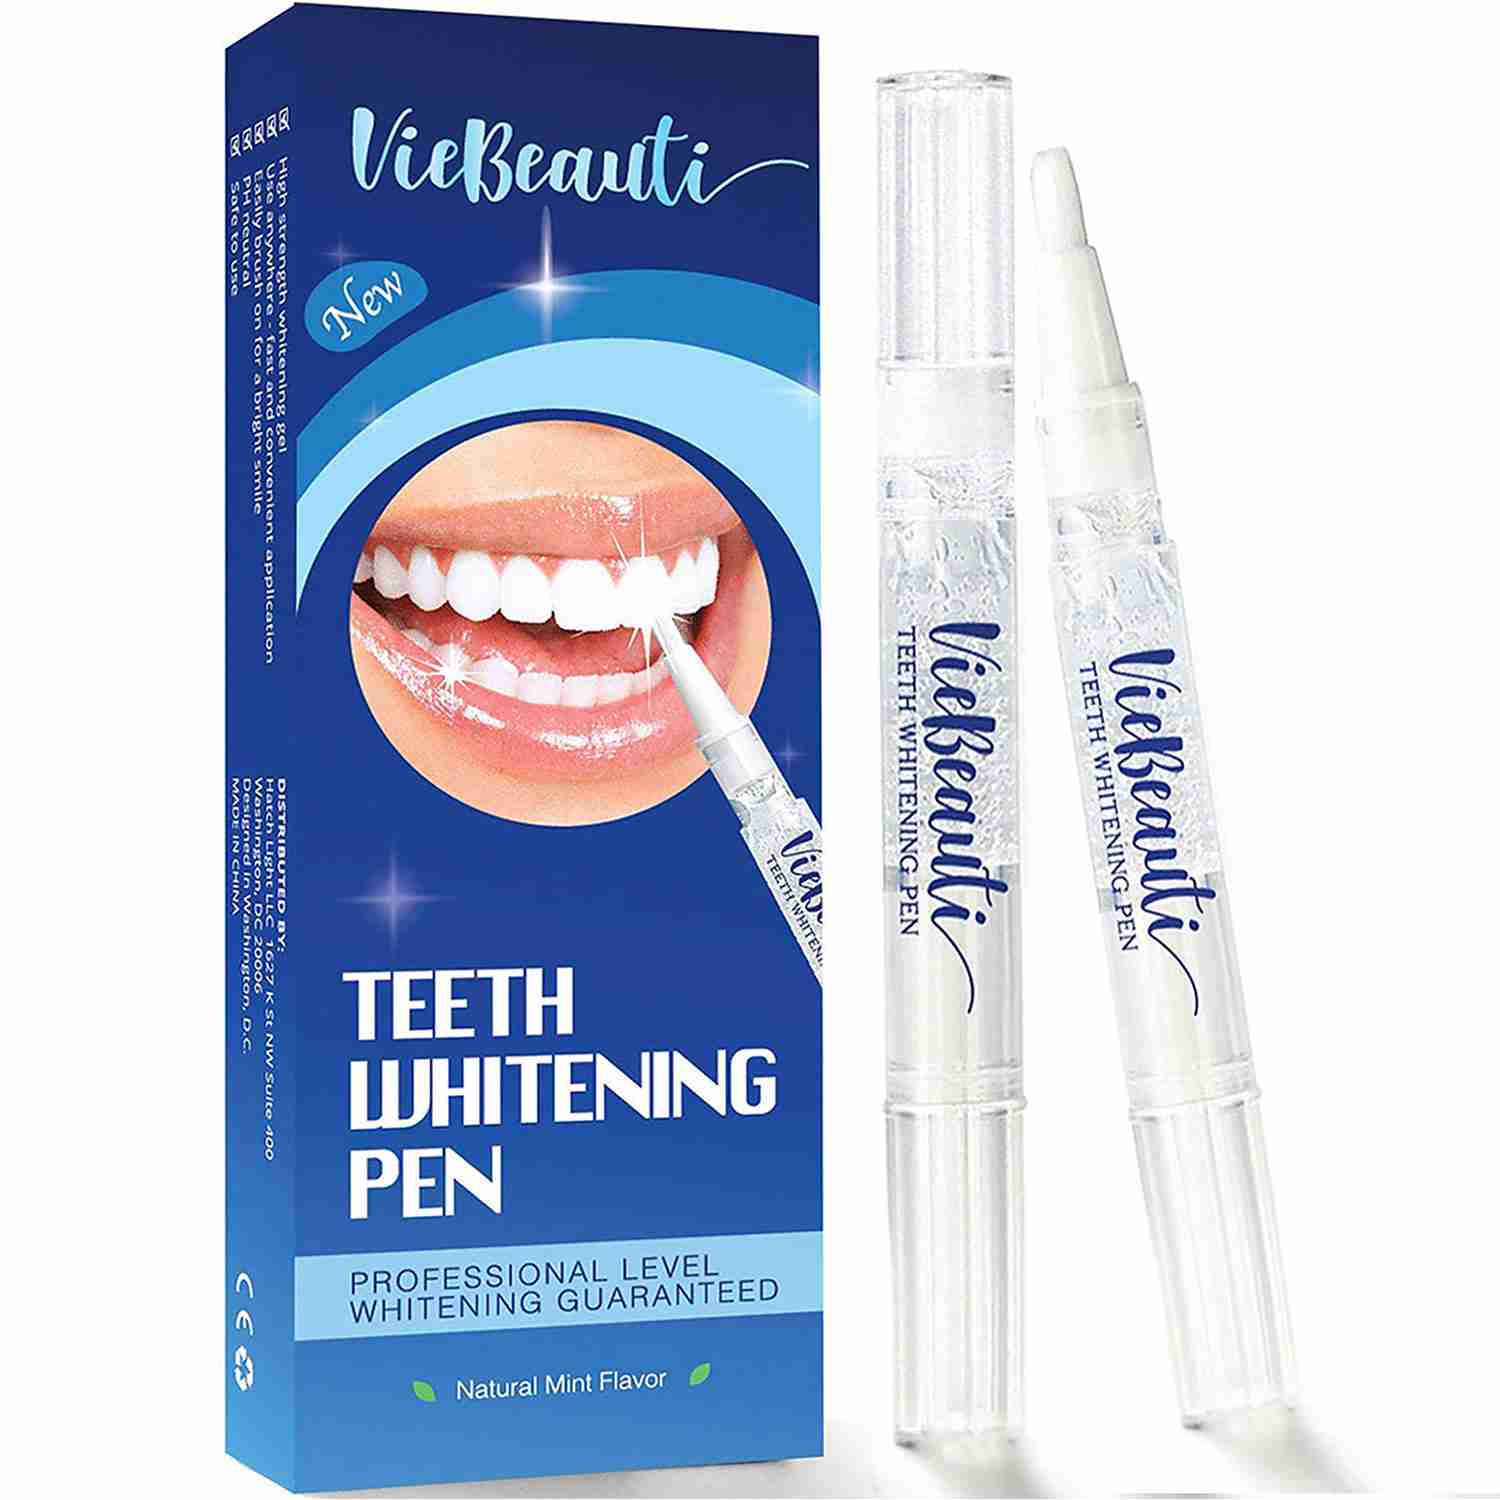 teeth-whitening-pen with cash back rebate